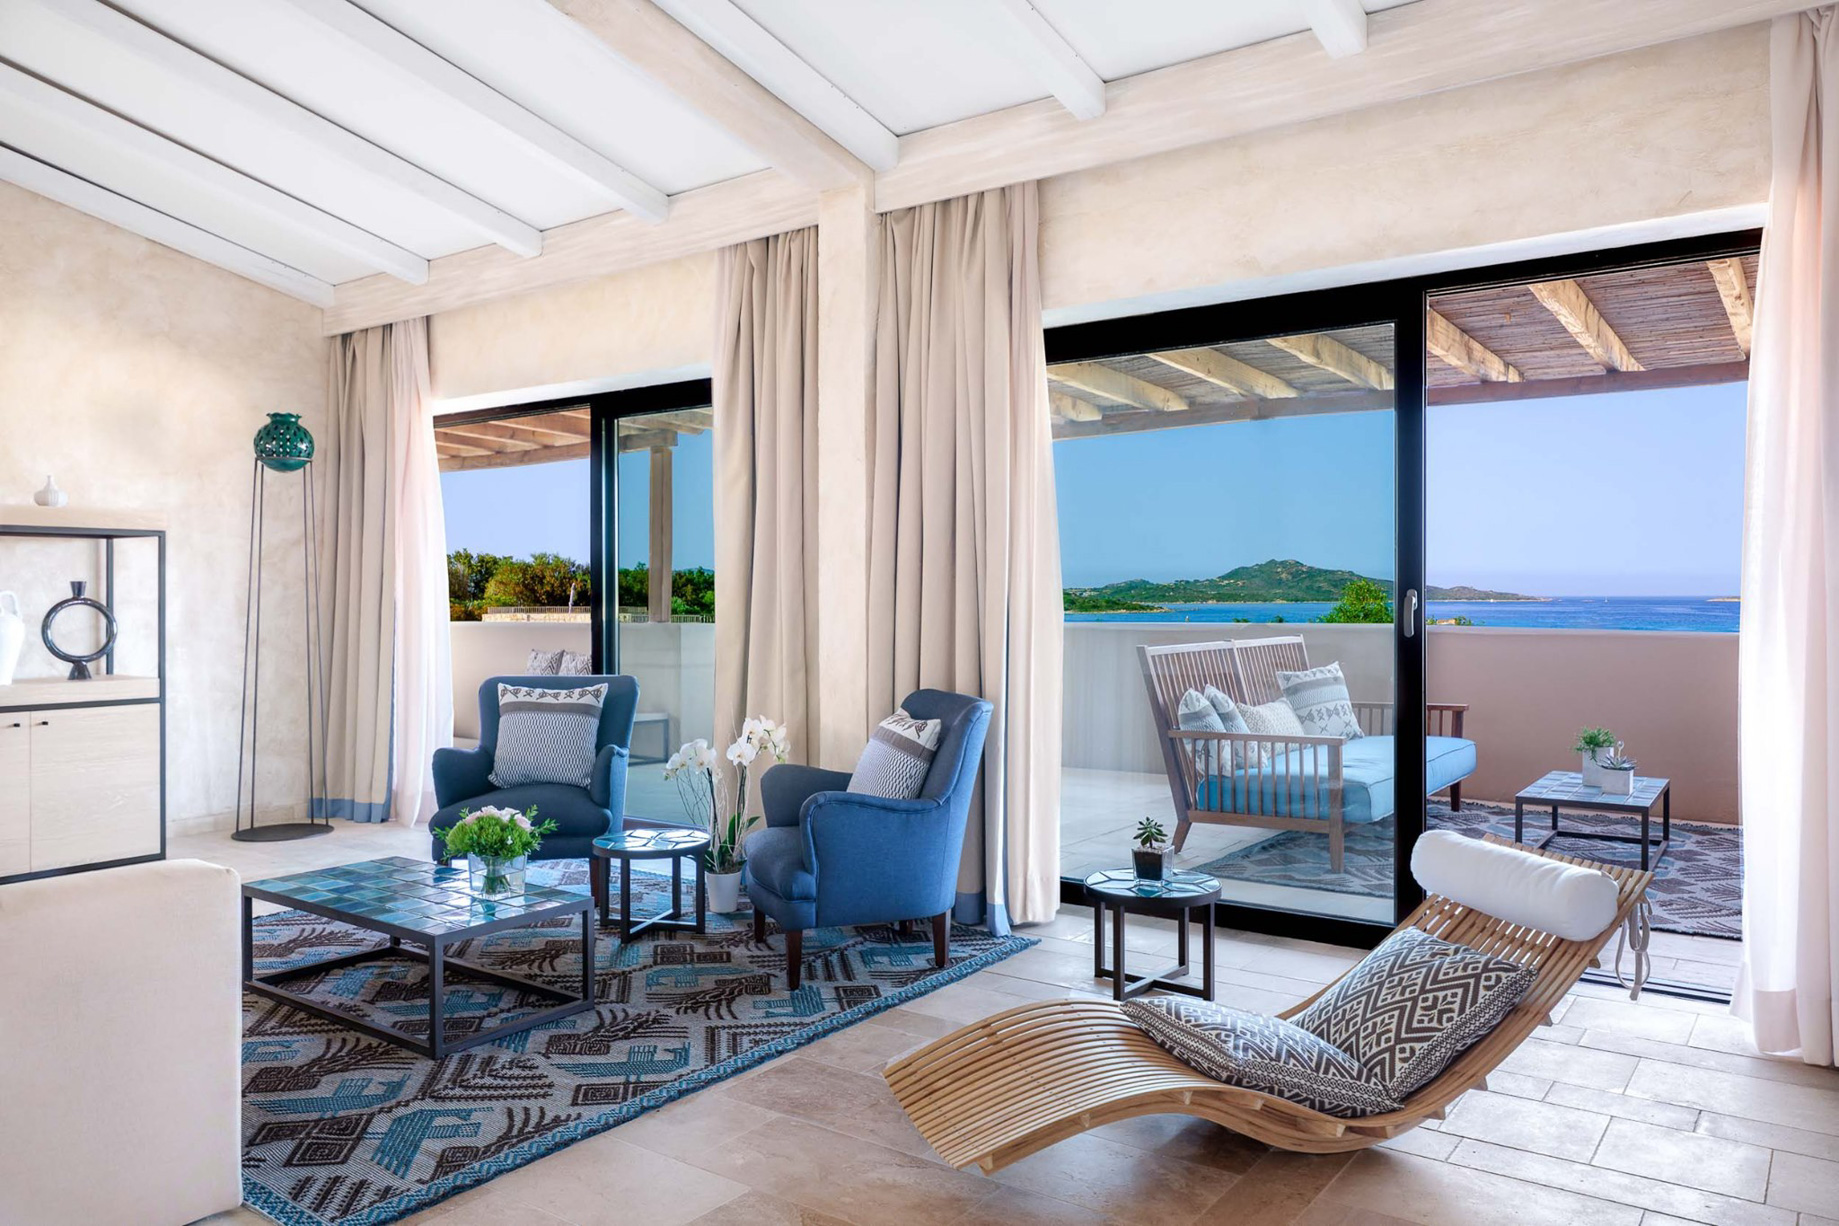 Baglioni Resort Sardinia – San Teodoro, Sardegna, Italy – Maddalena Suite Living Room